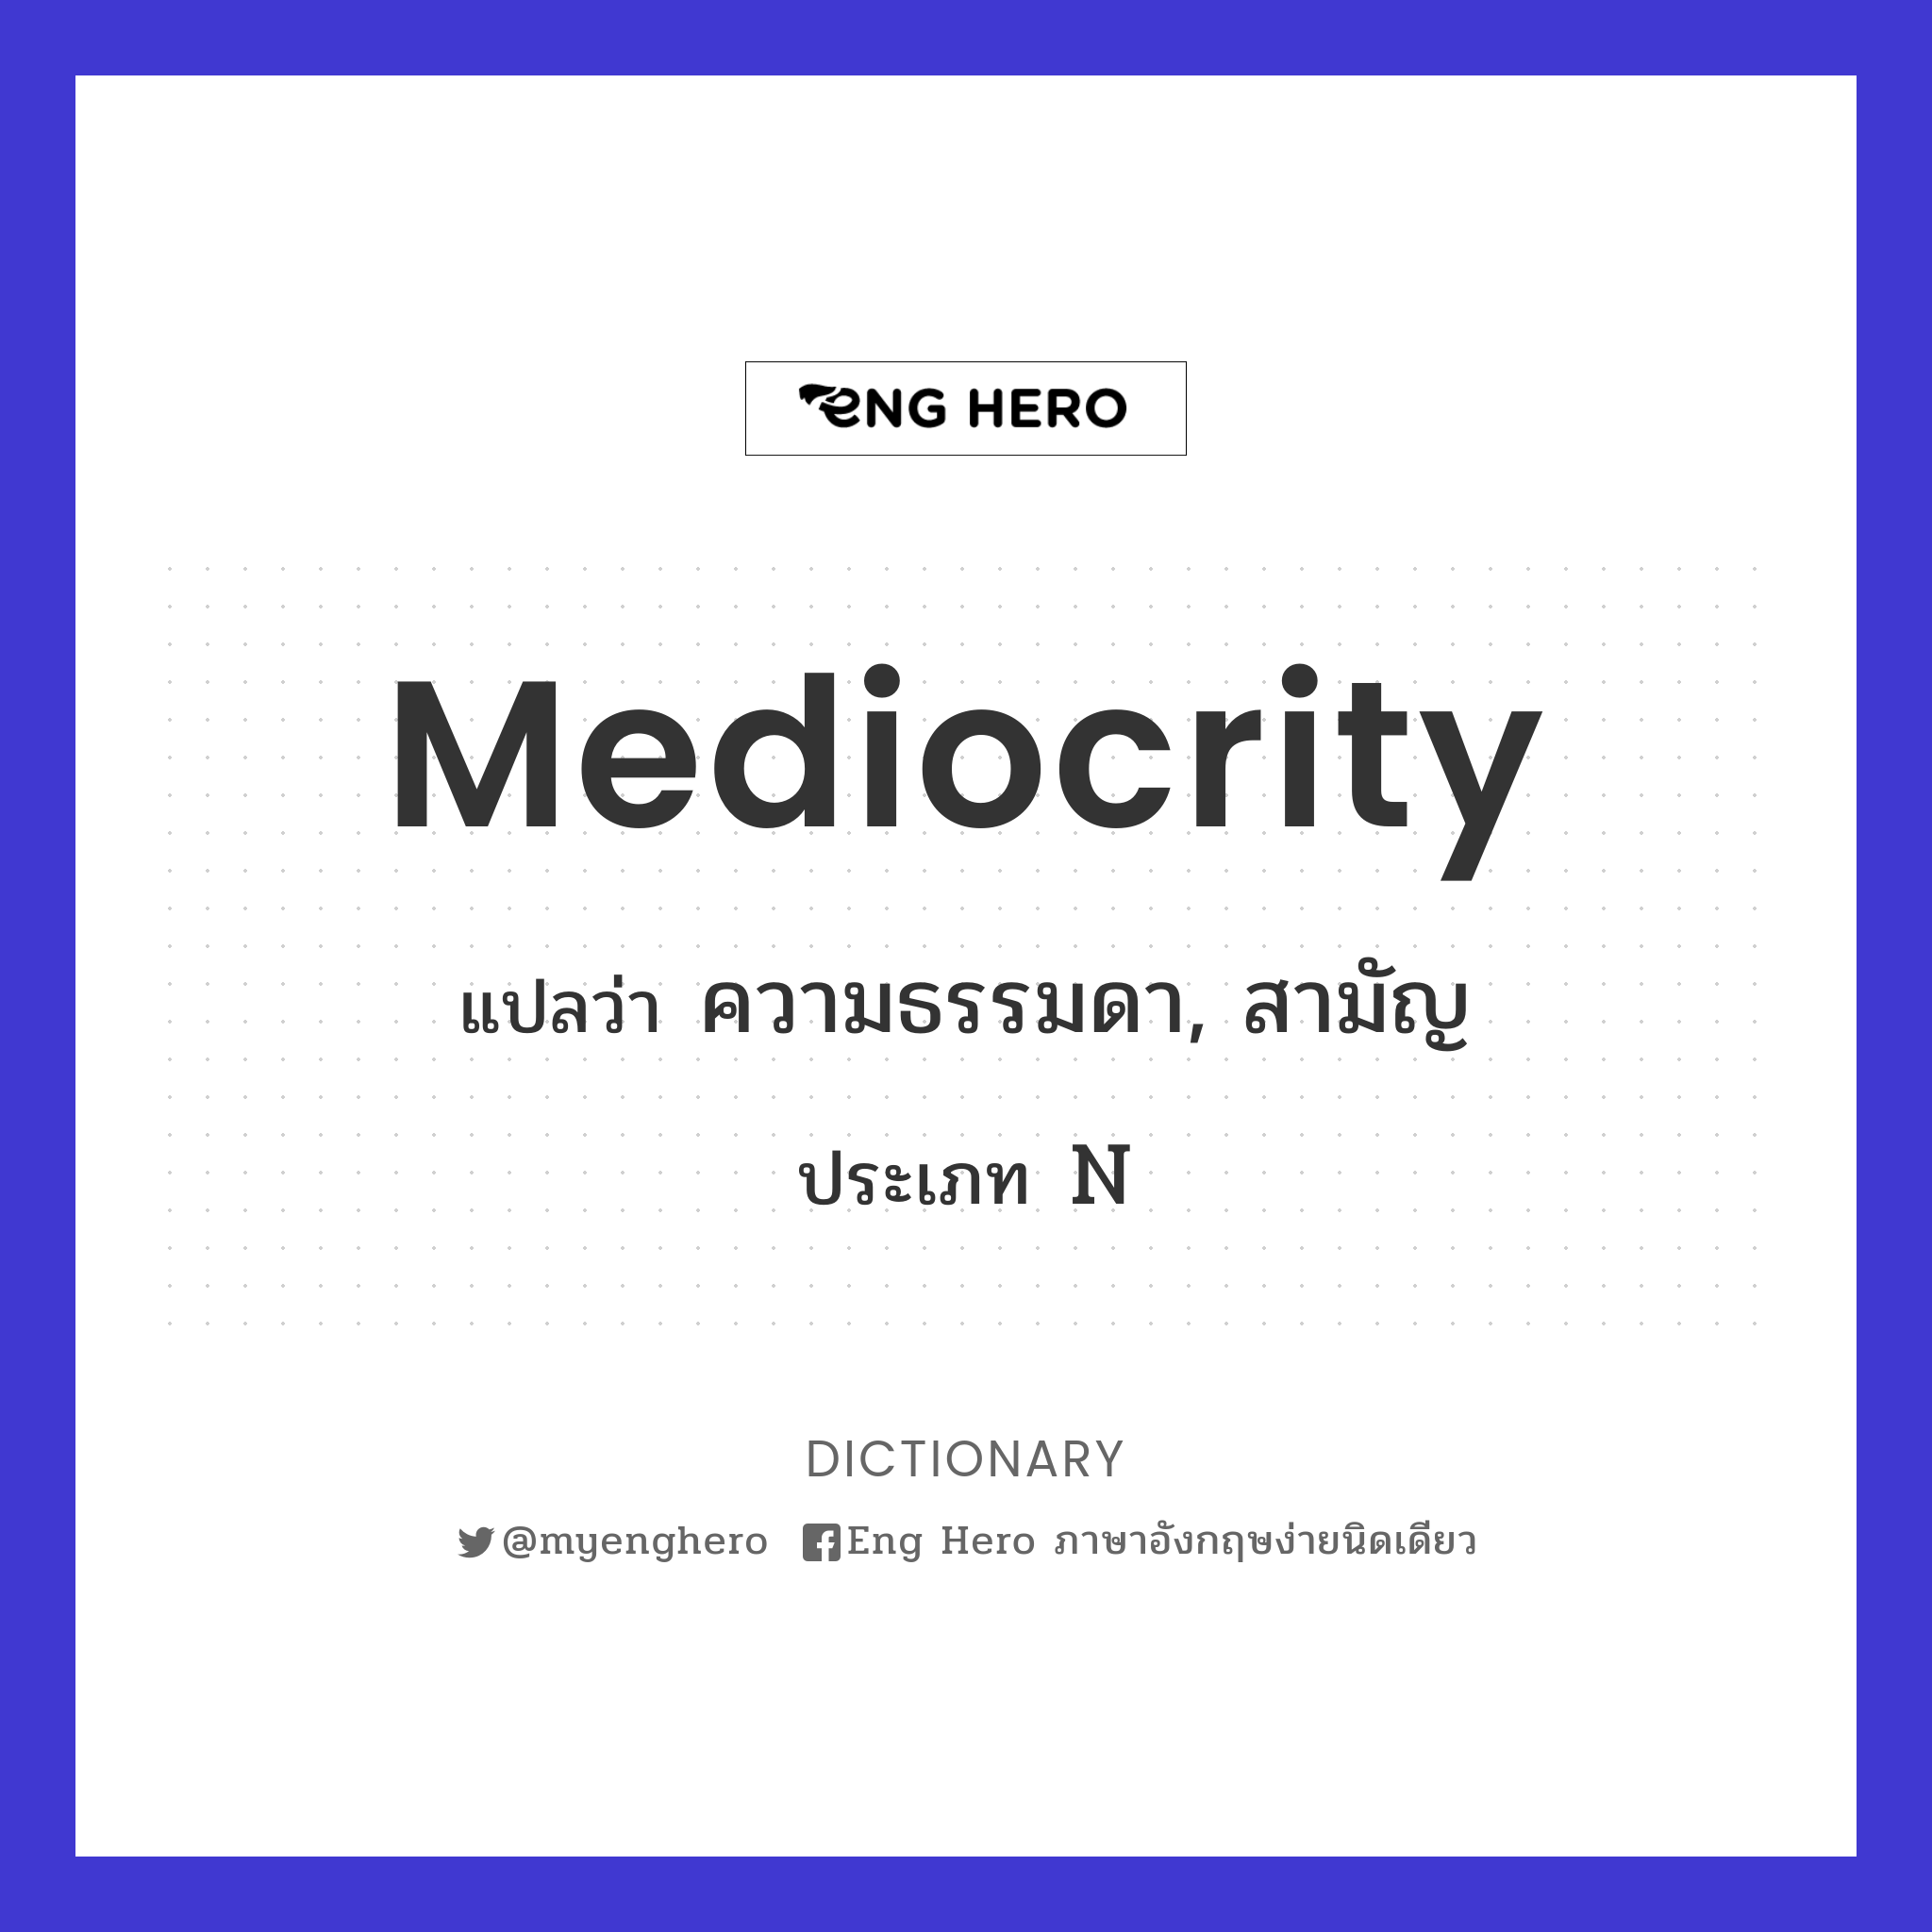 mediocrity